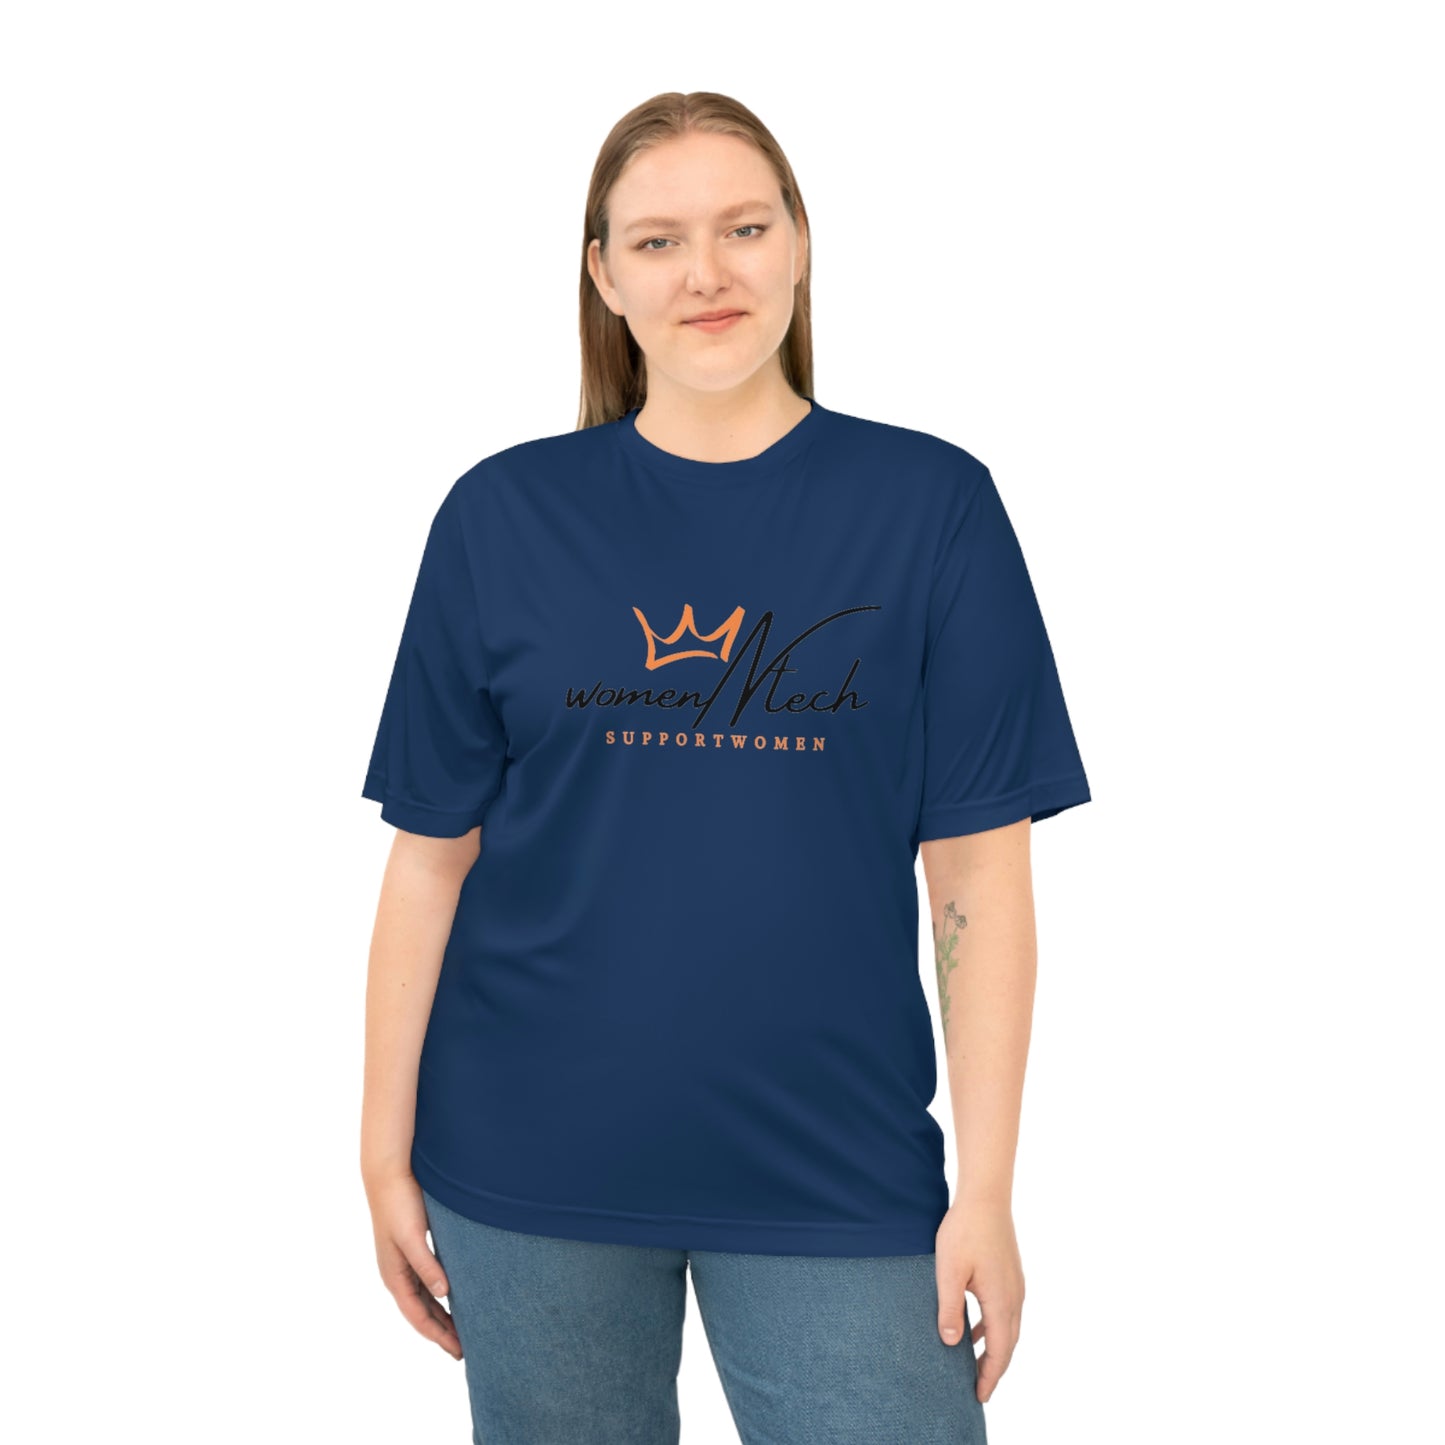 Purchase Unisex Zone Performance T-shirt For Cheap Price - WomenNtech